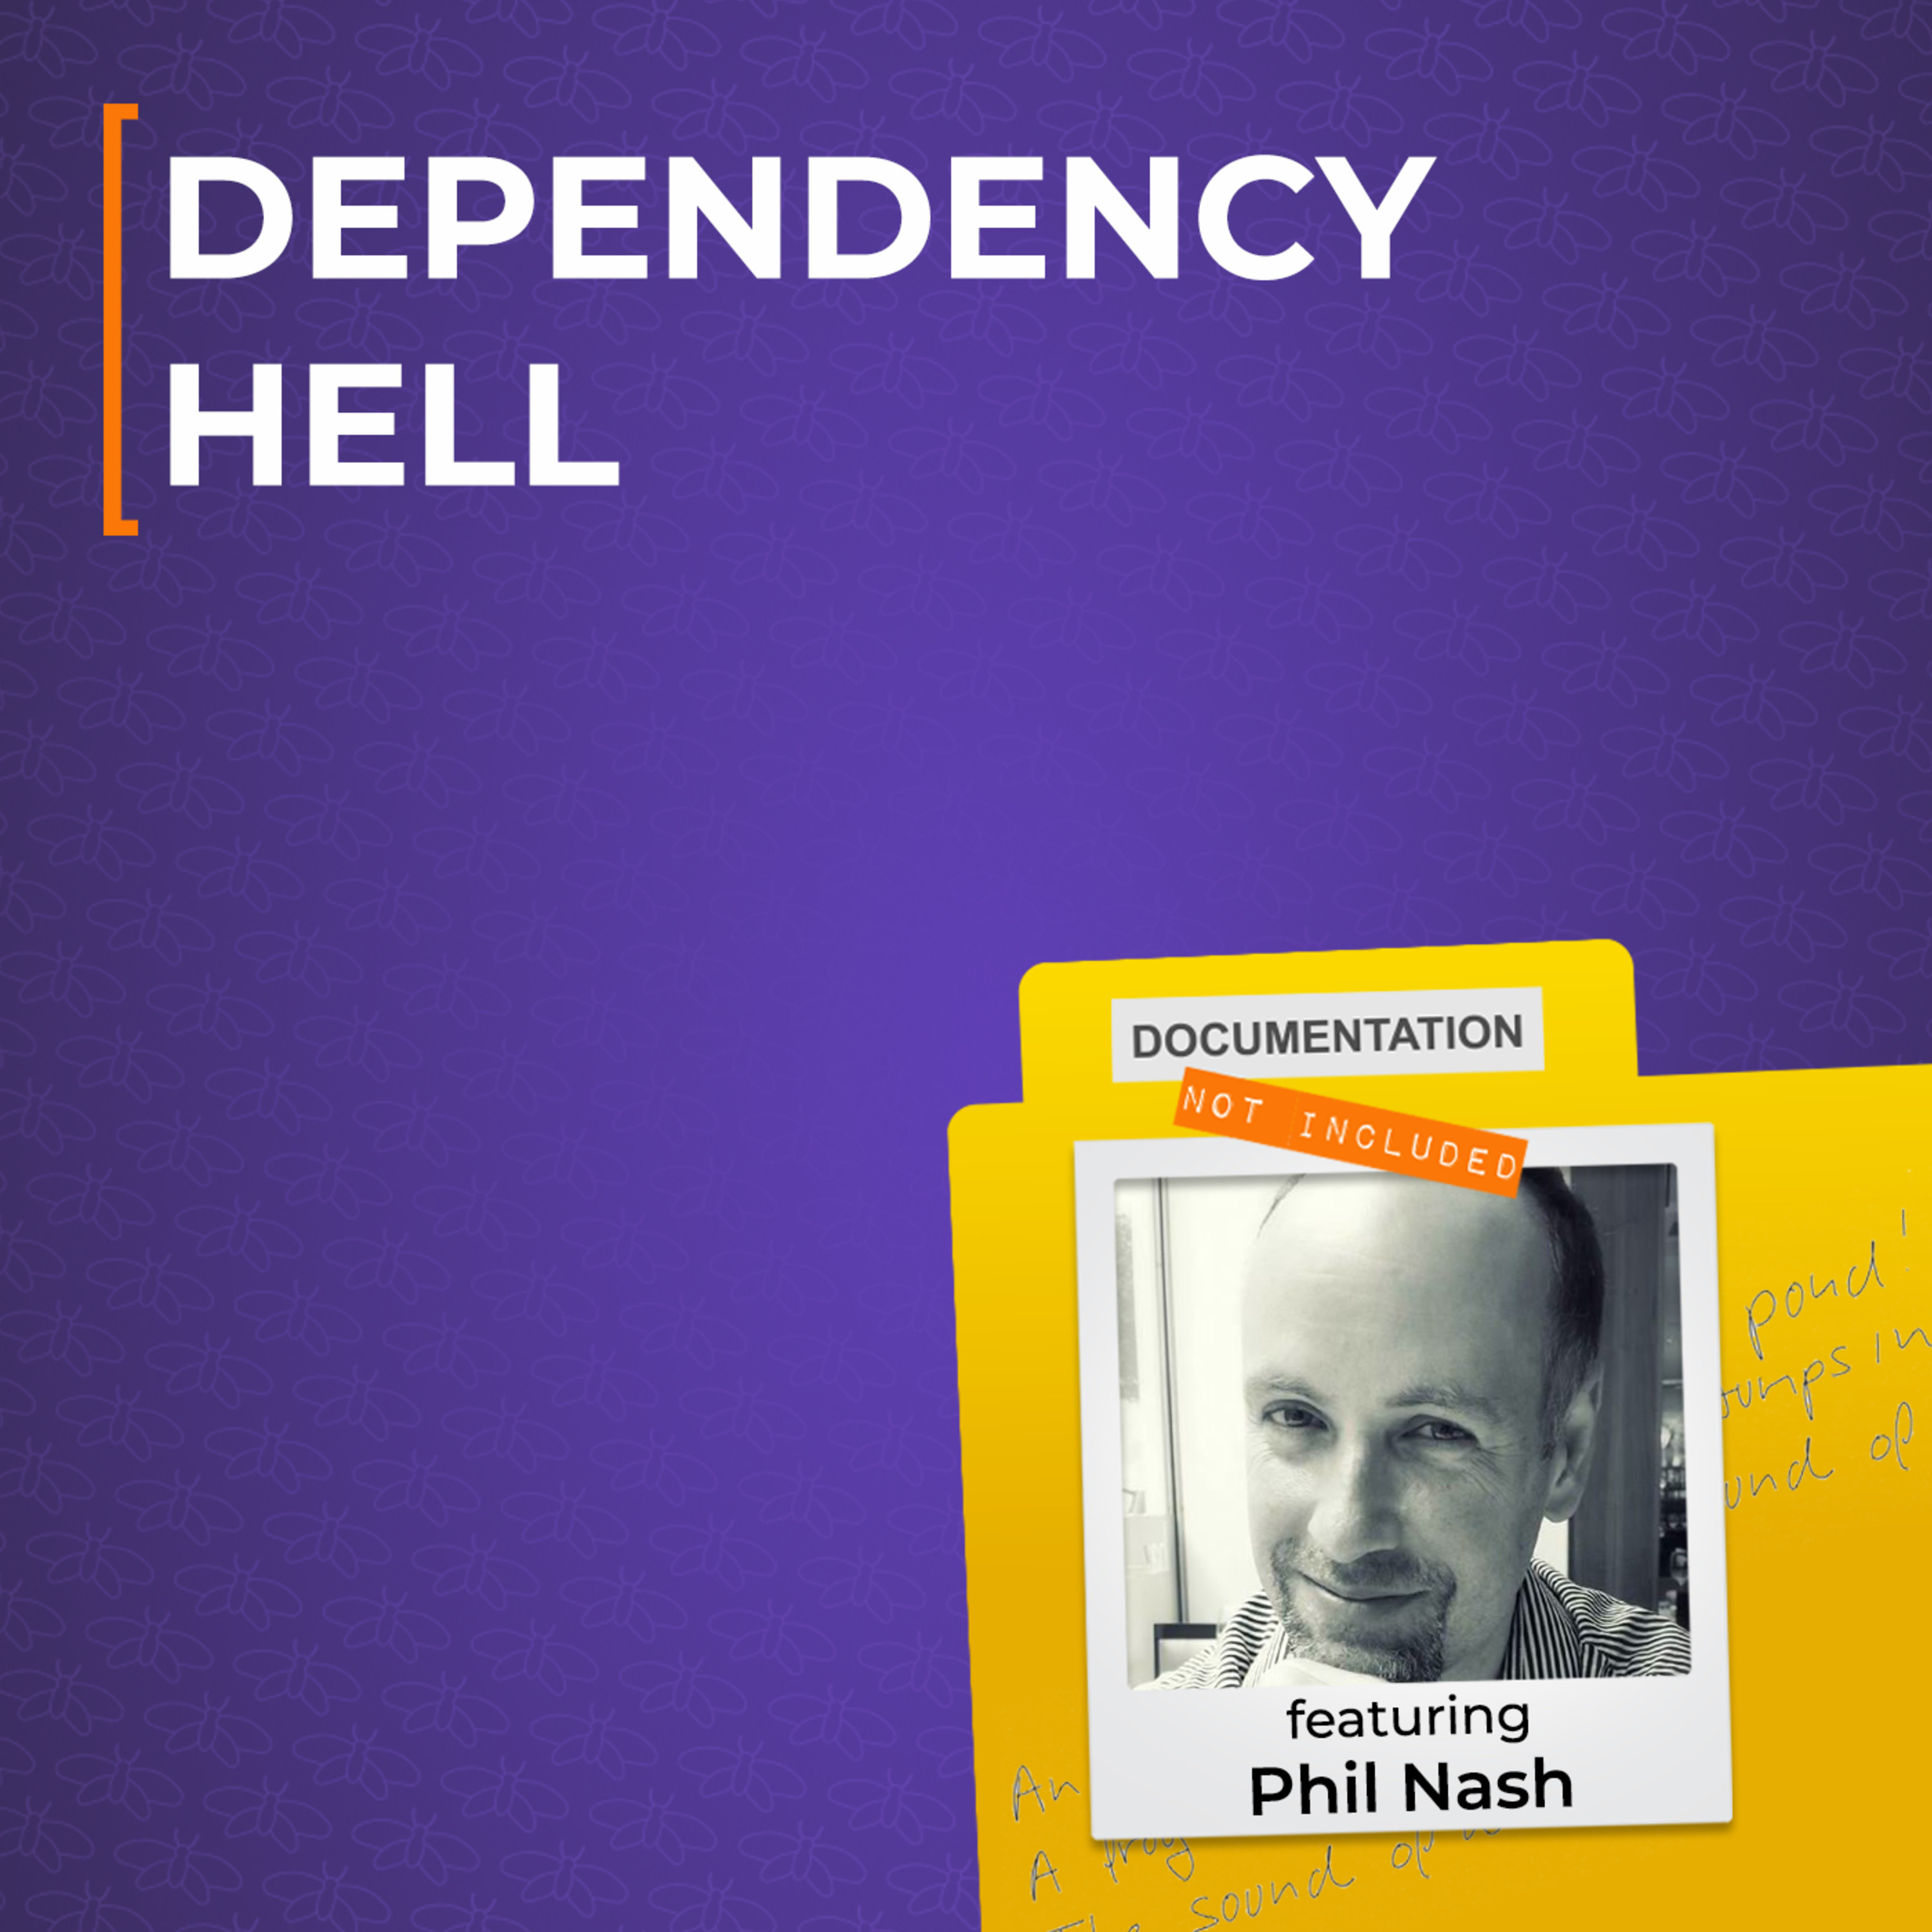 Dependency Hell